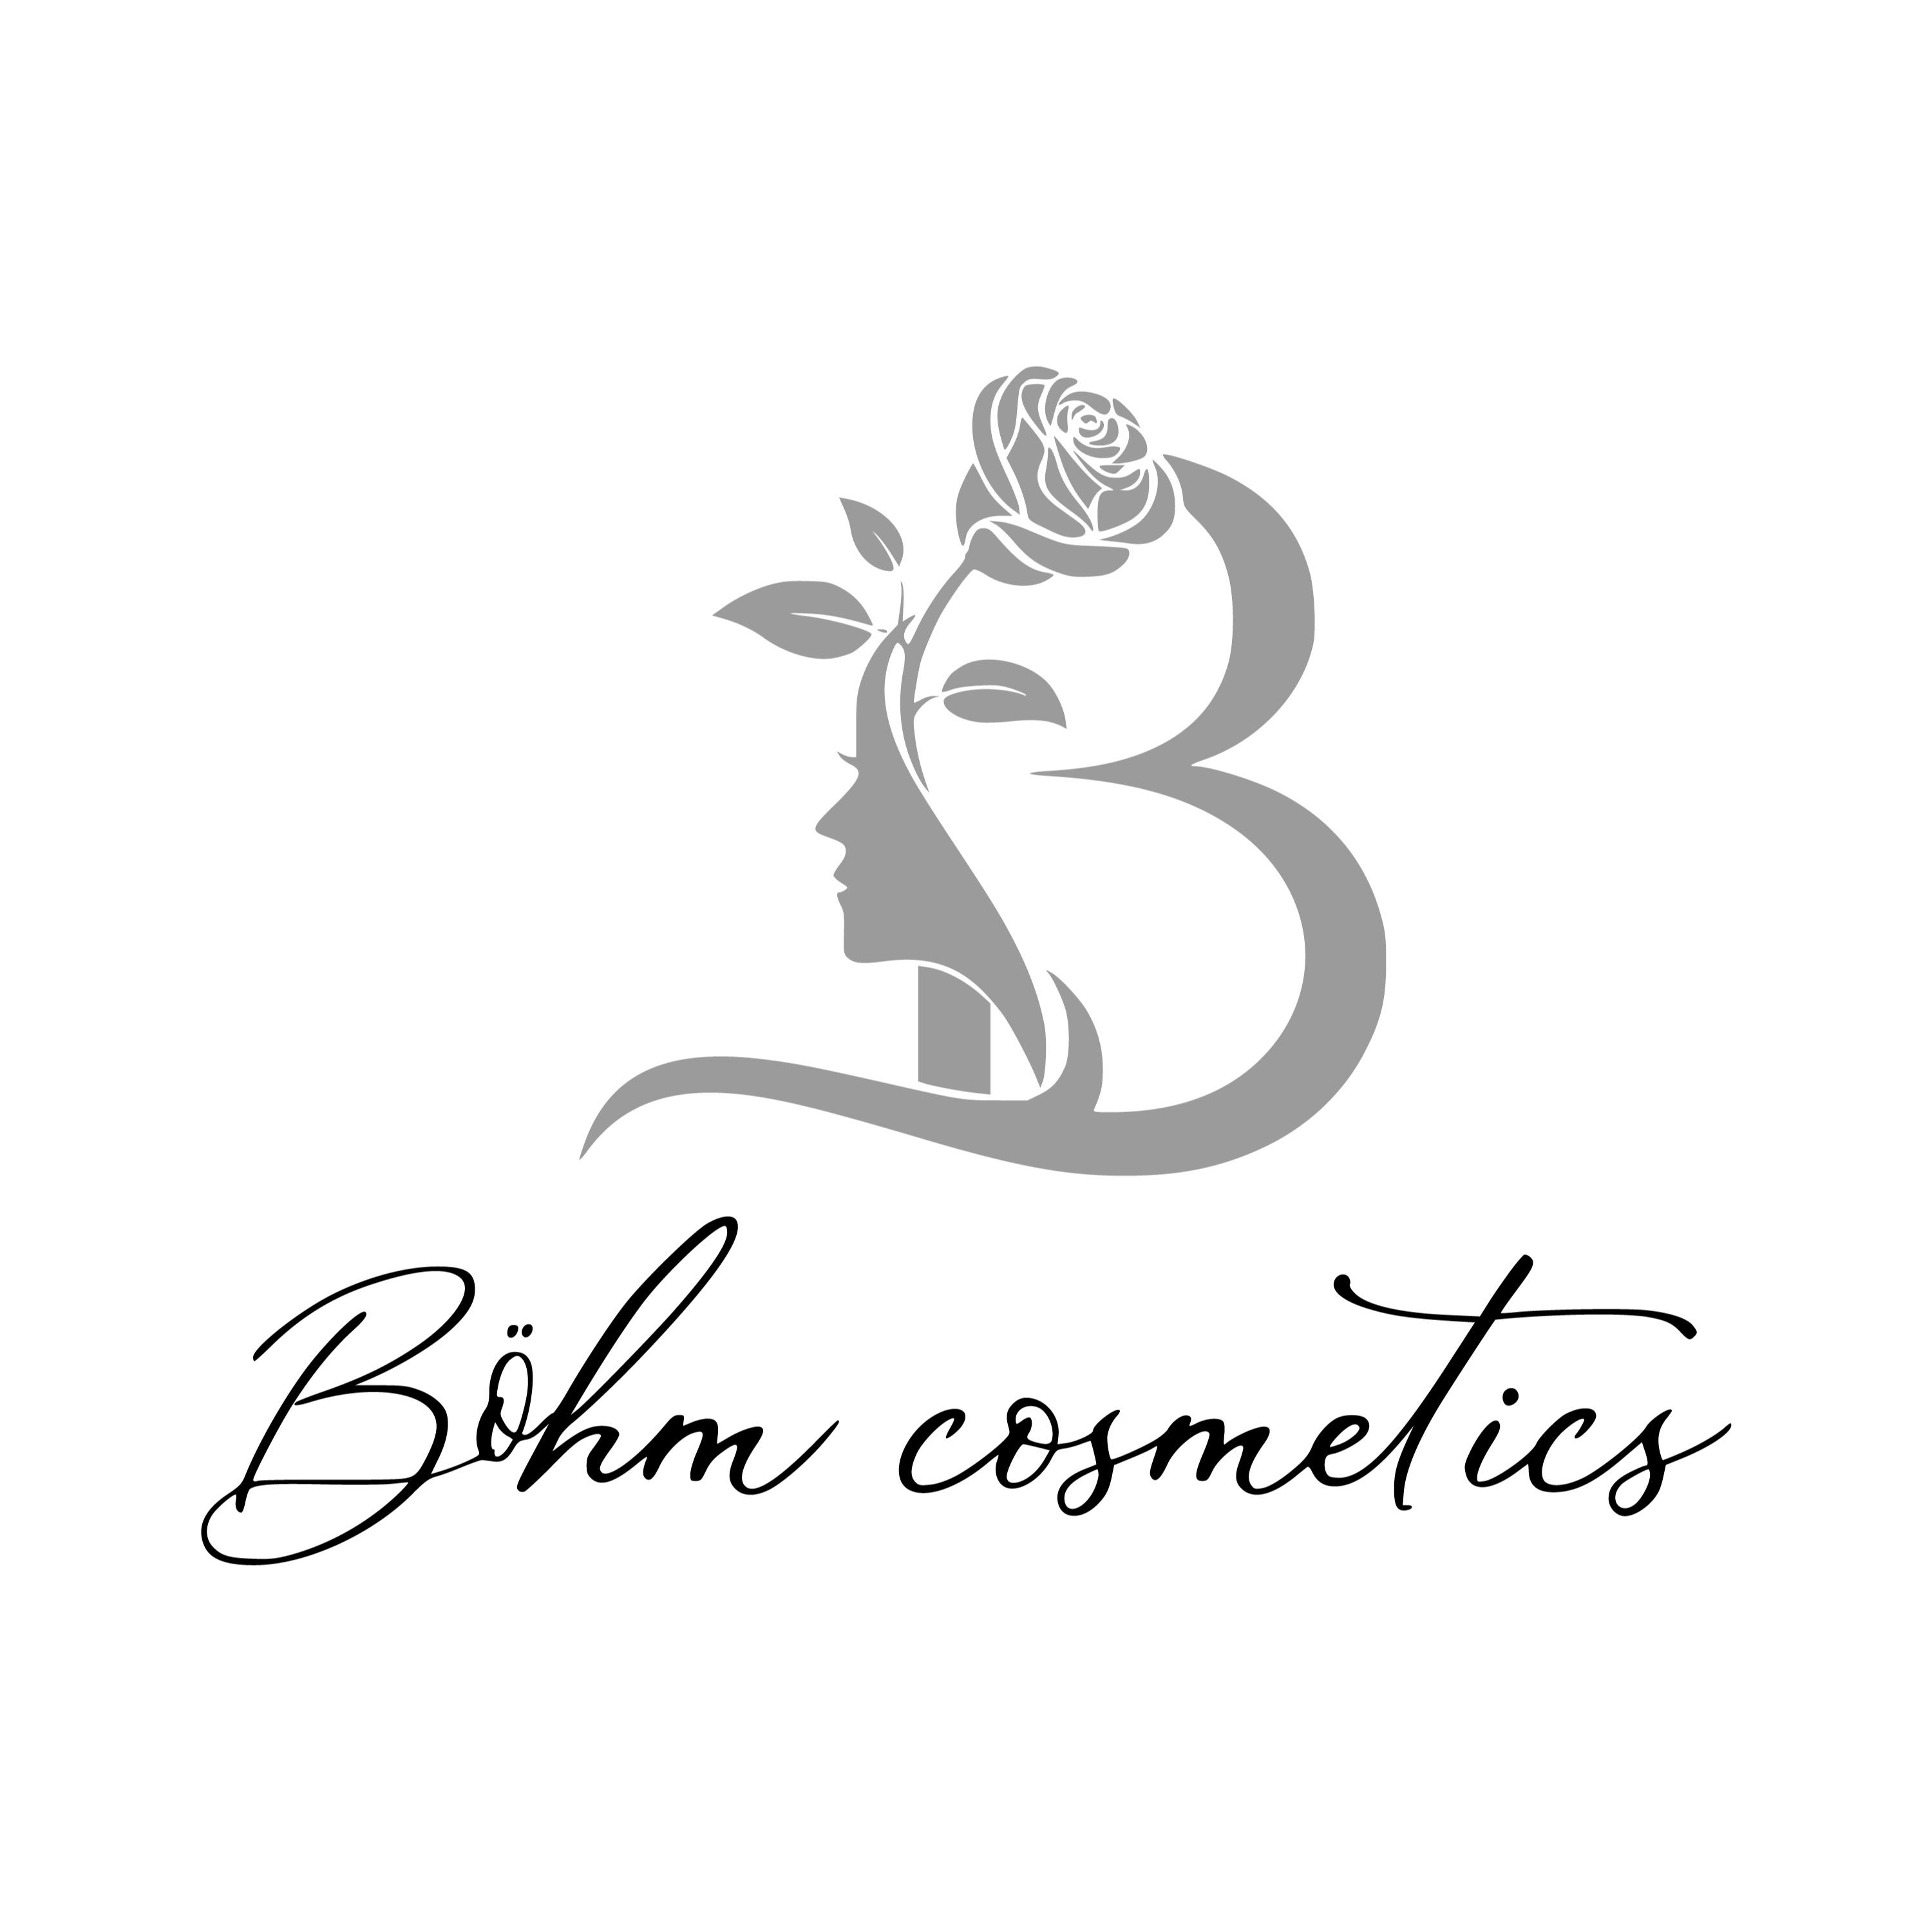 Böhm cosmetics - Kosmetikstudio München Logo